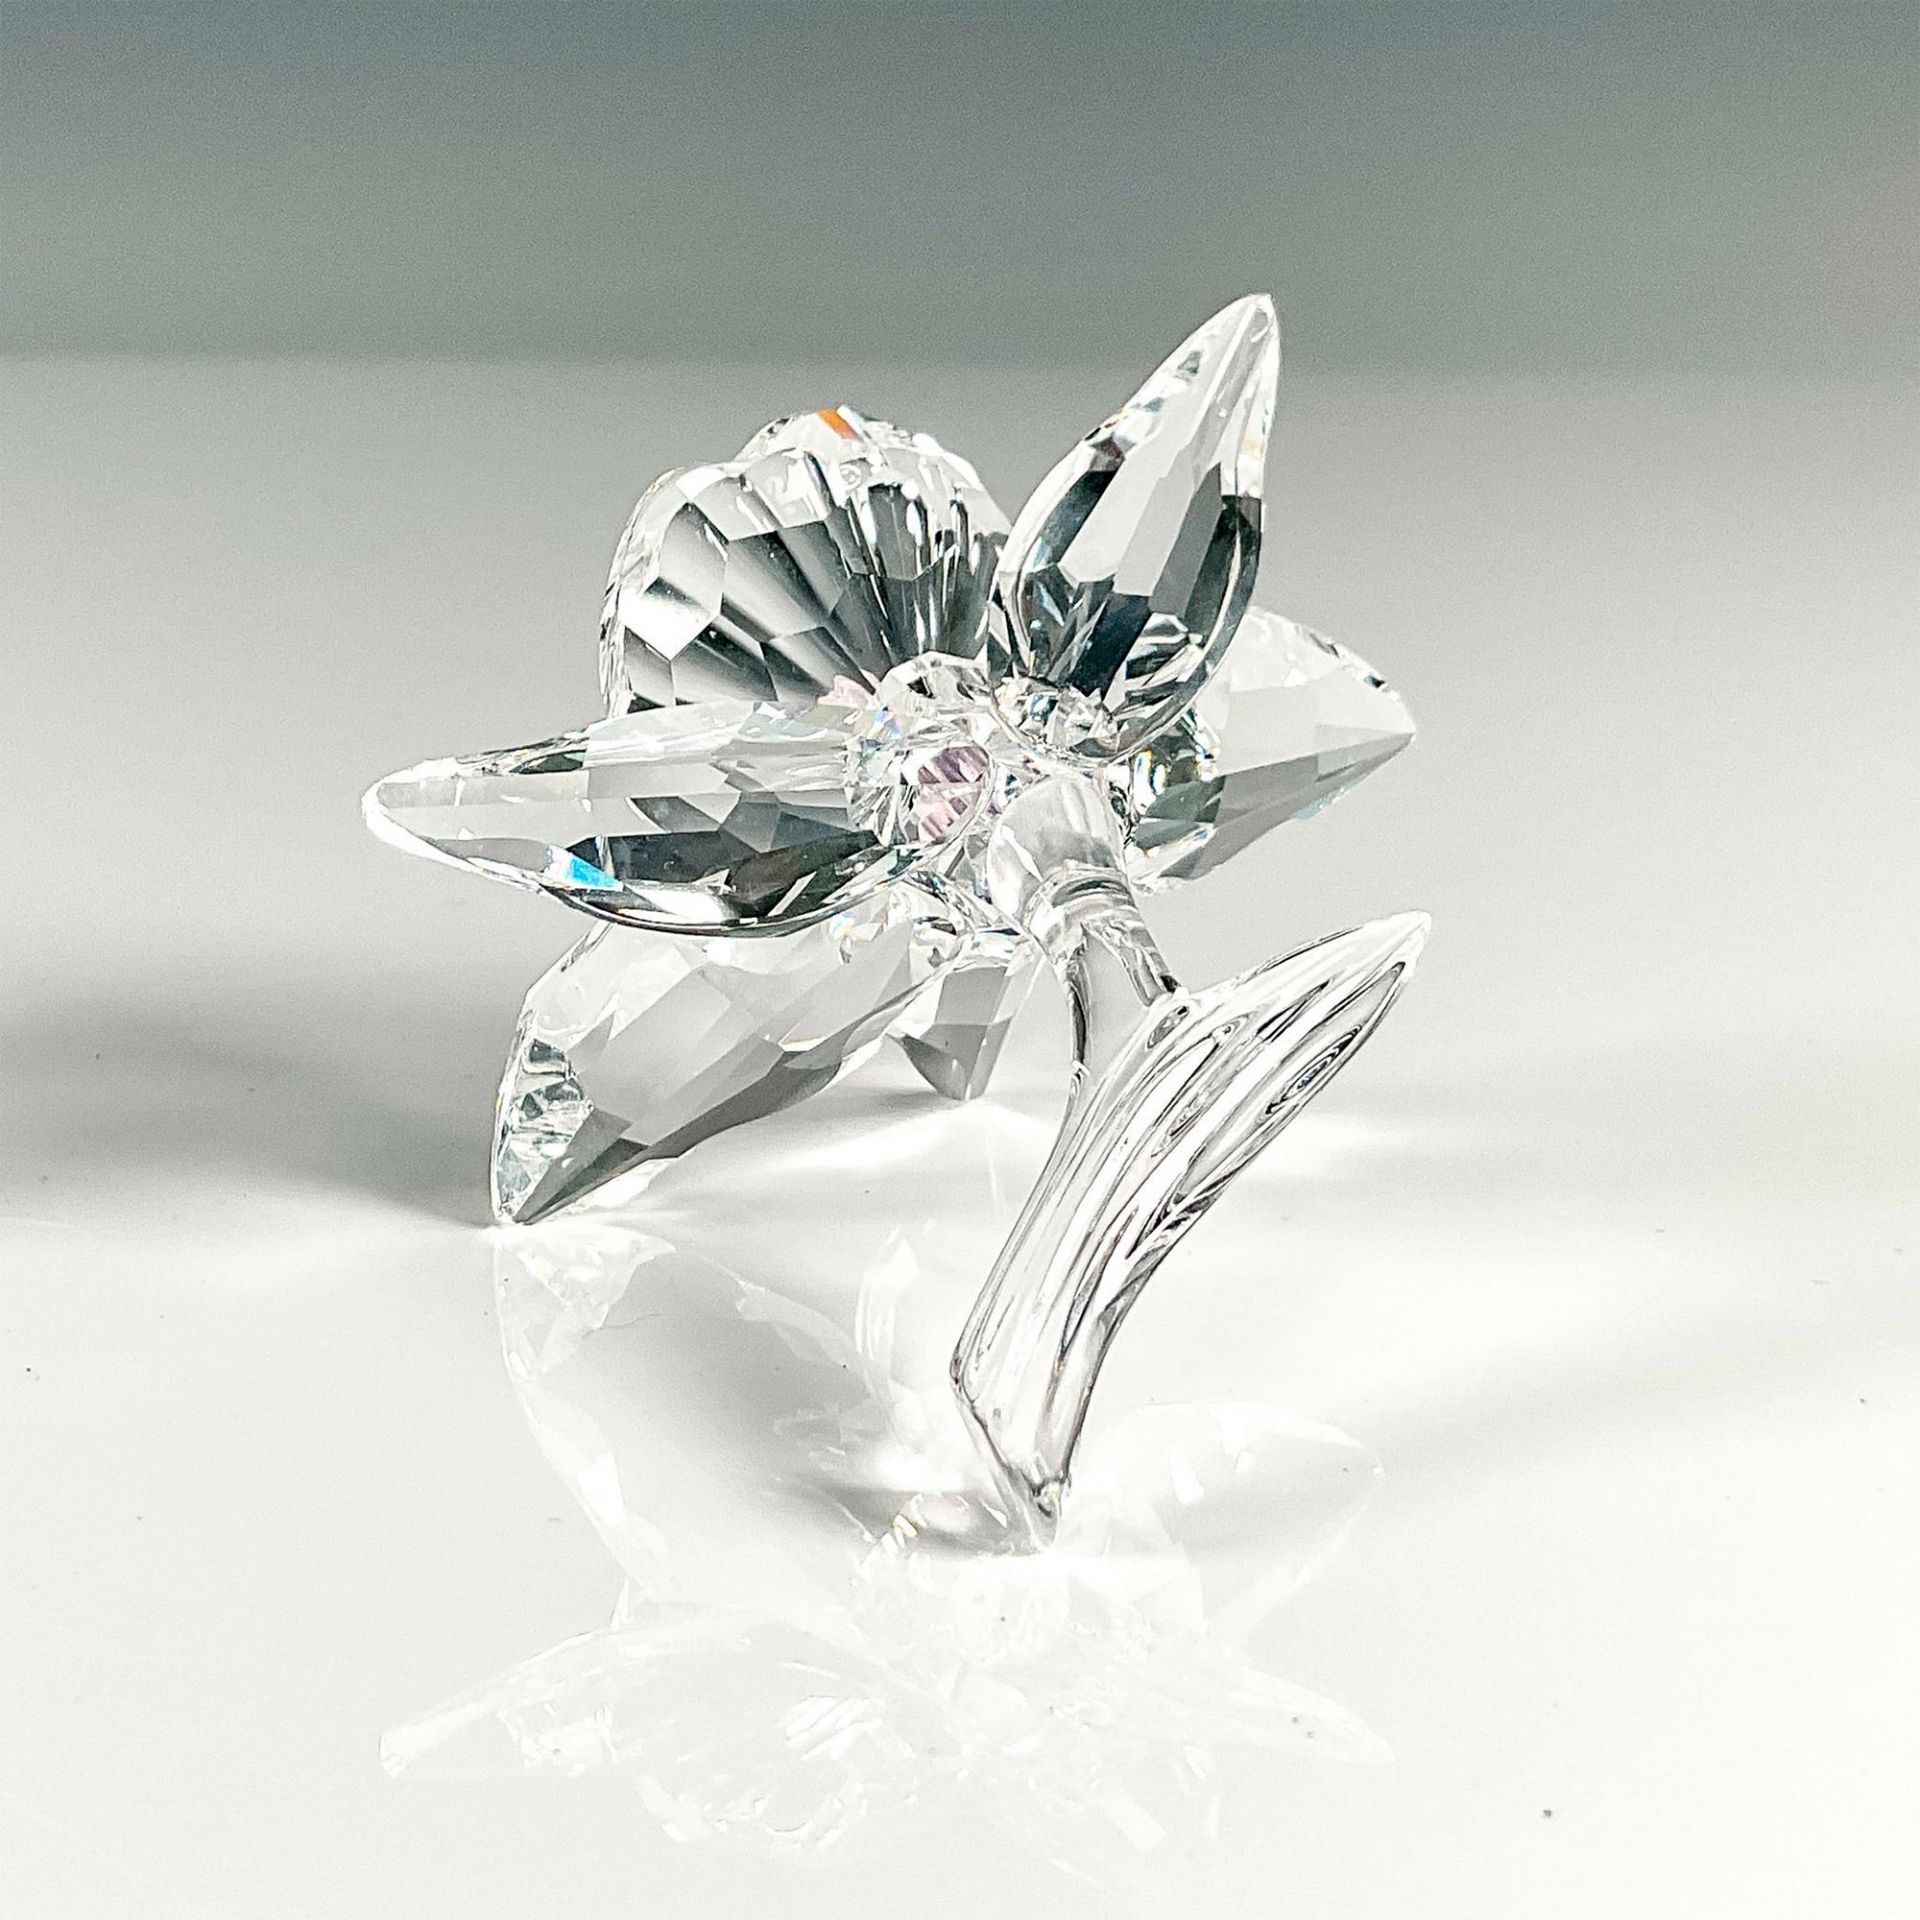 Swarovski Silver Crystal Figurine, Orchid Pink - Image 3 of 4